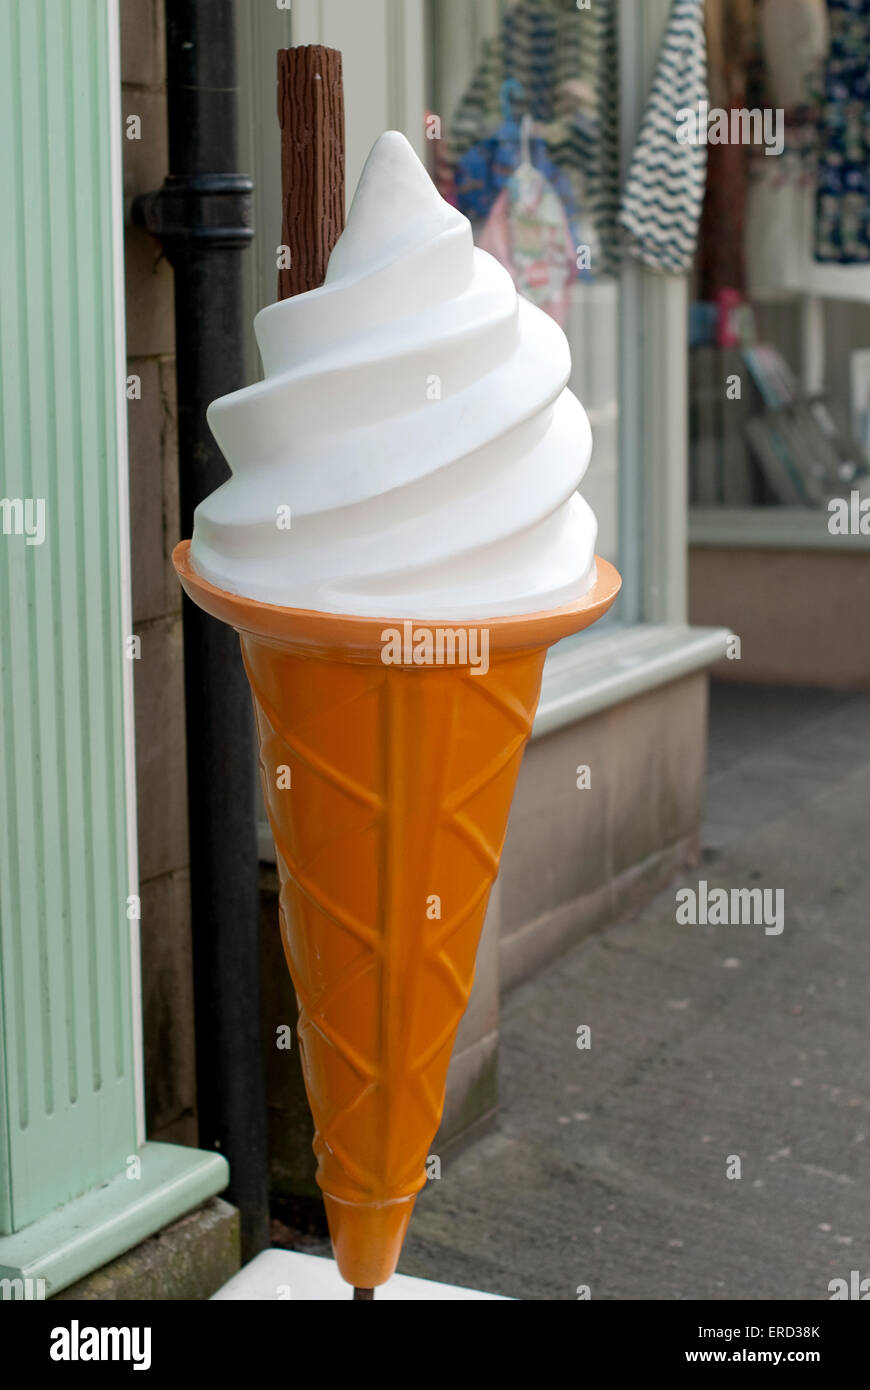 Documentary image of a large plastic icecream cone